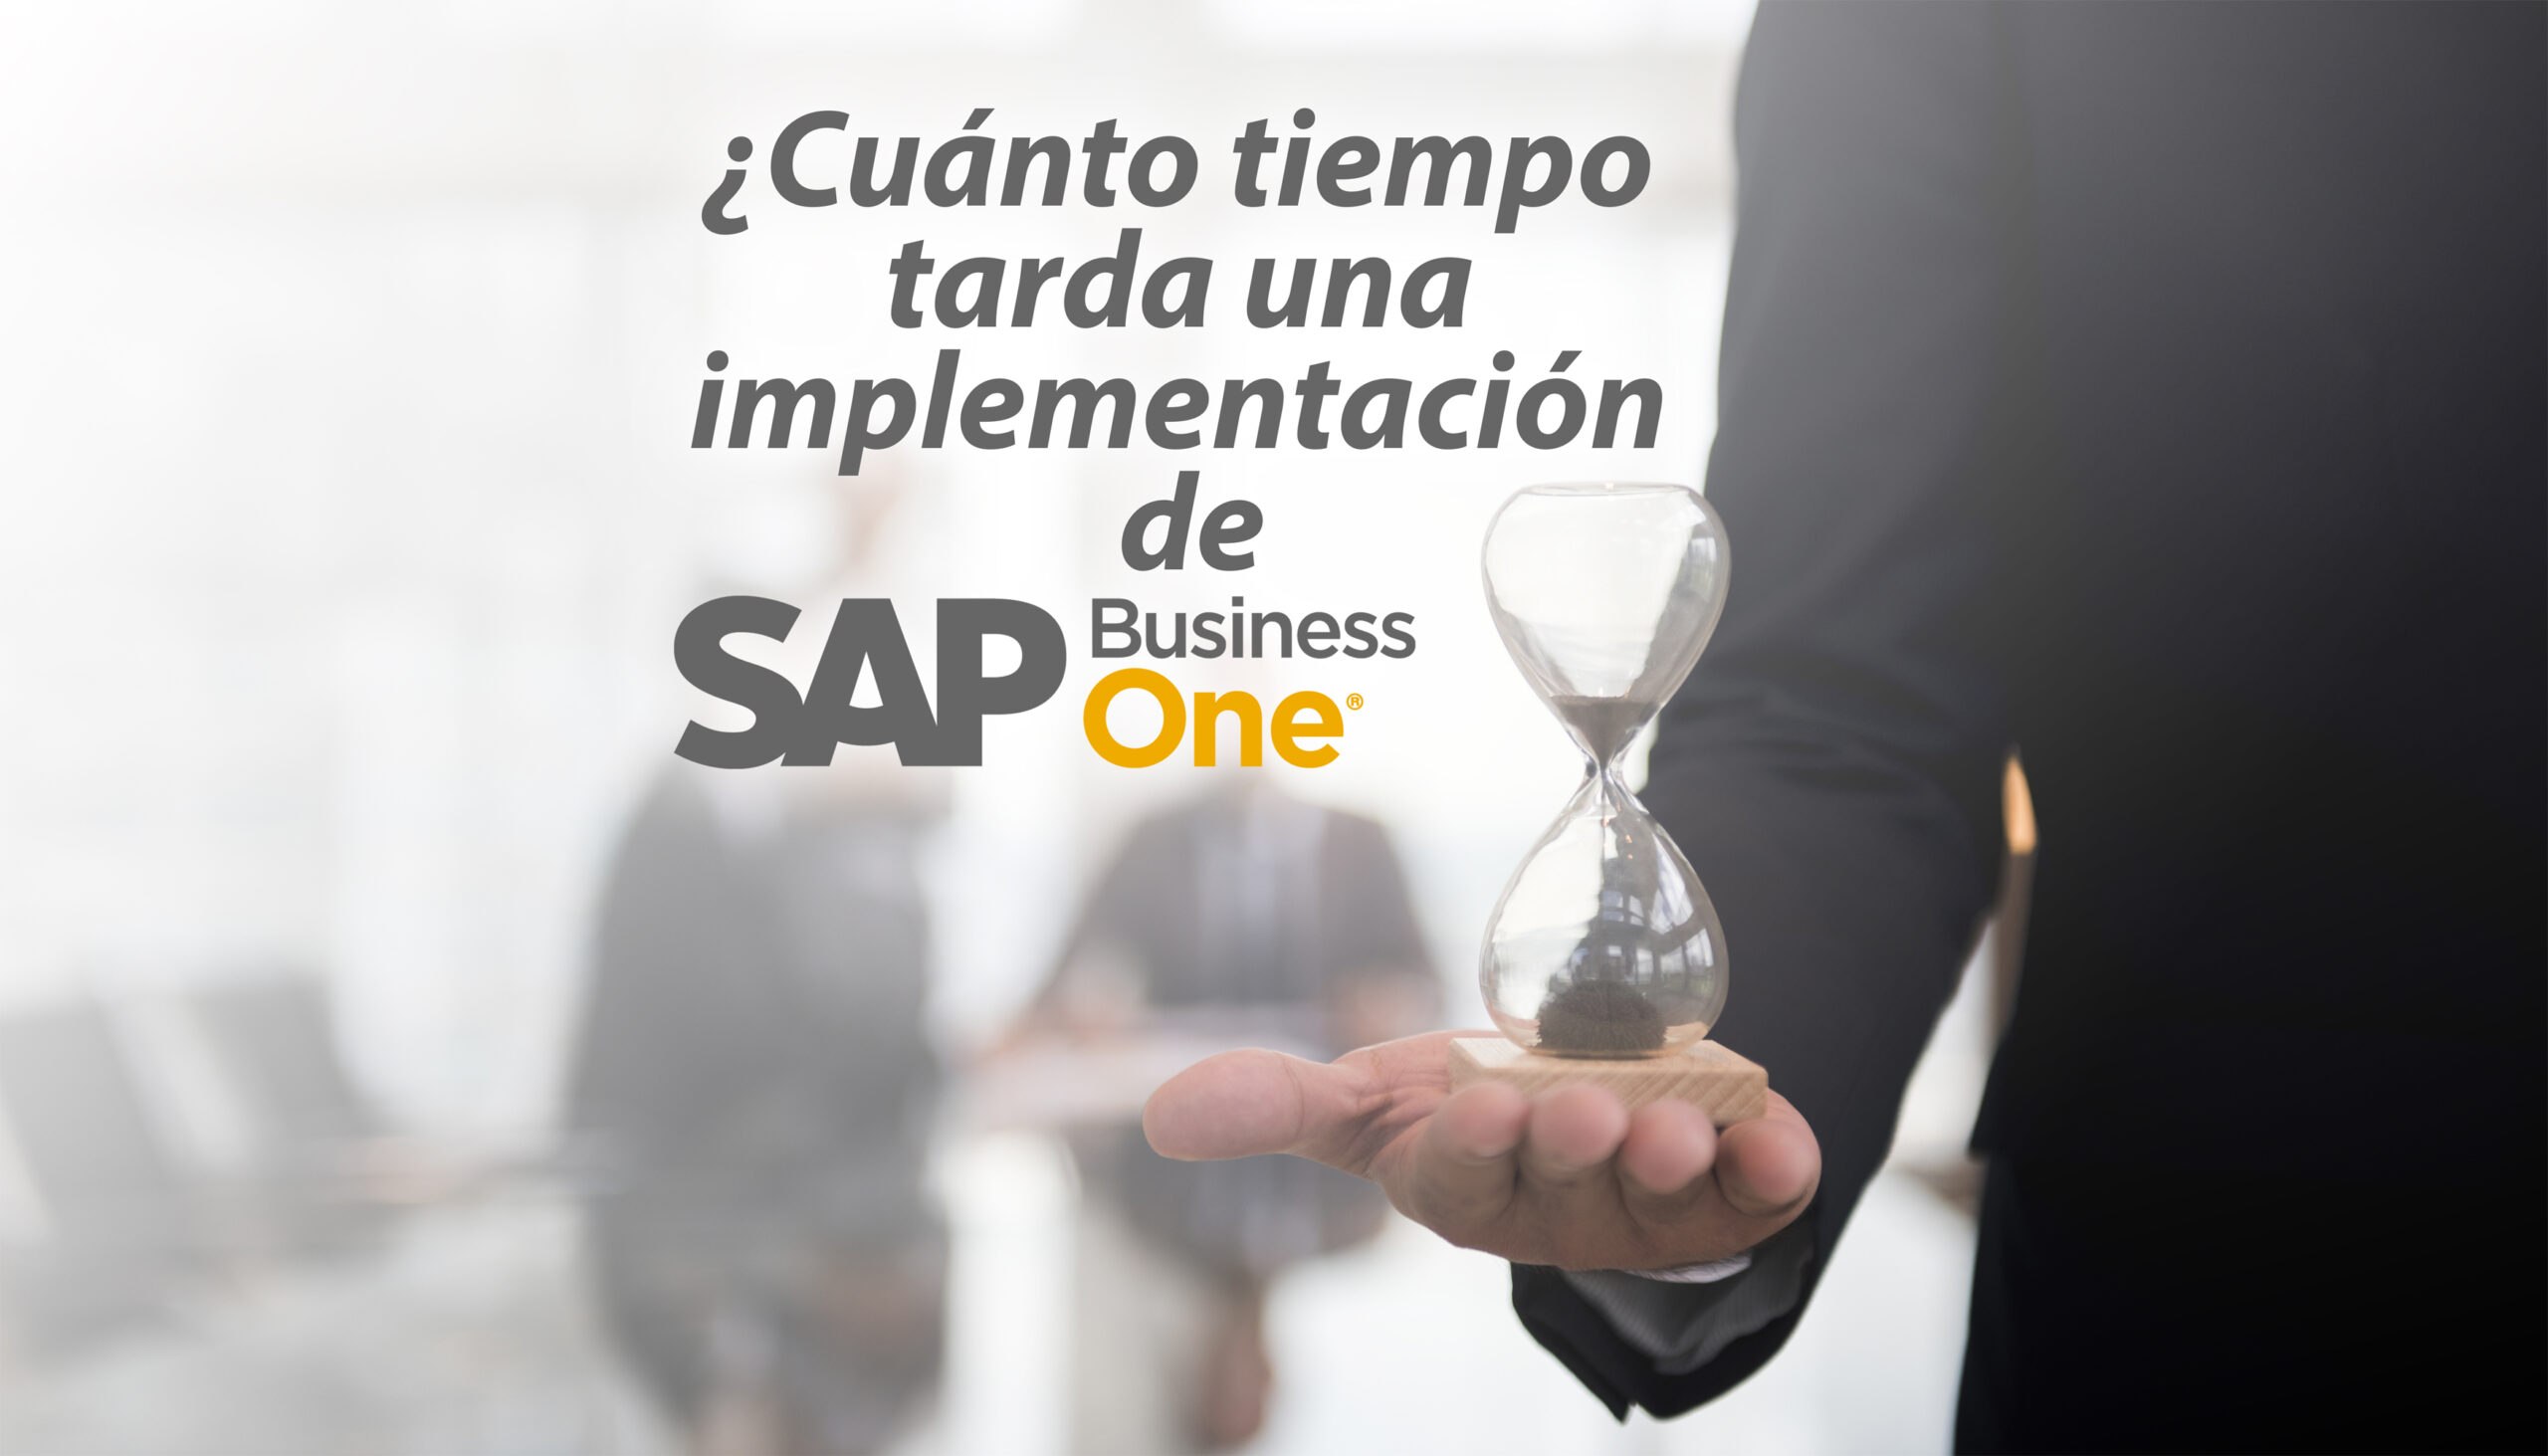 Cuanto tiempo tarda SAP Business One